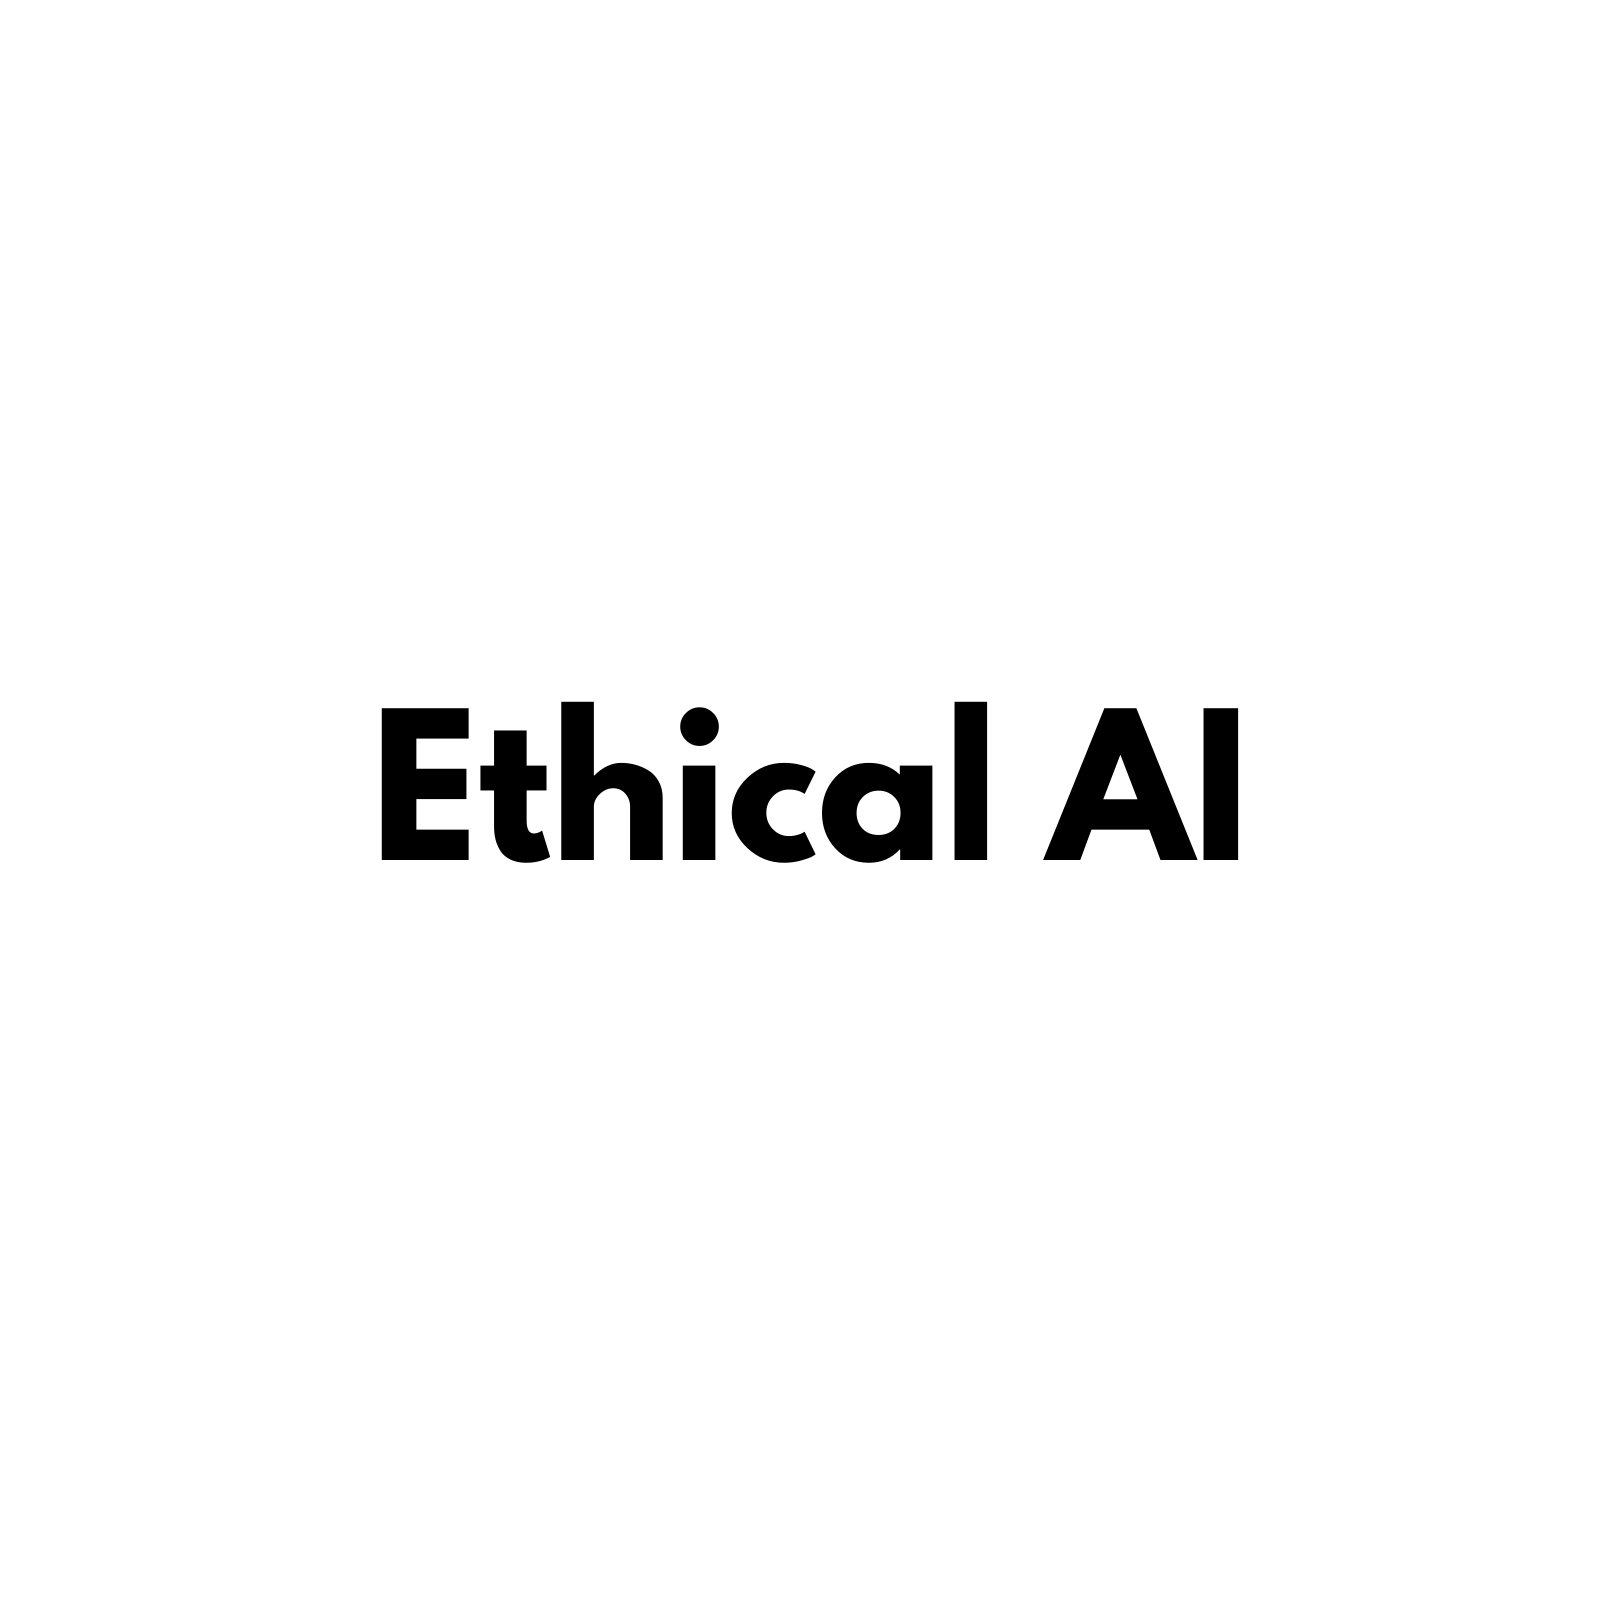 Ethical AI 